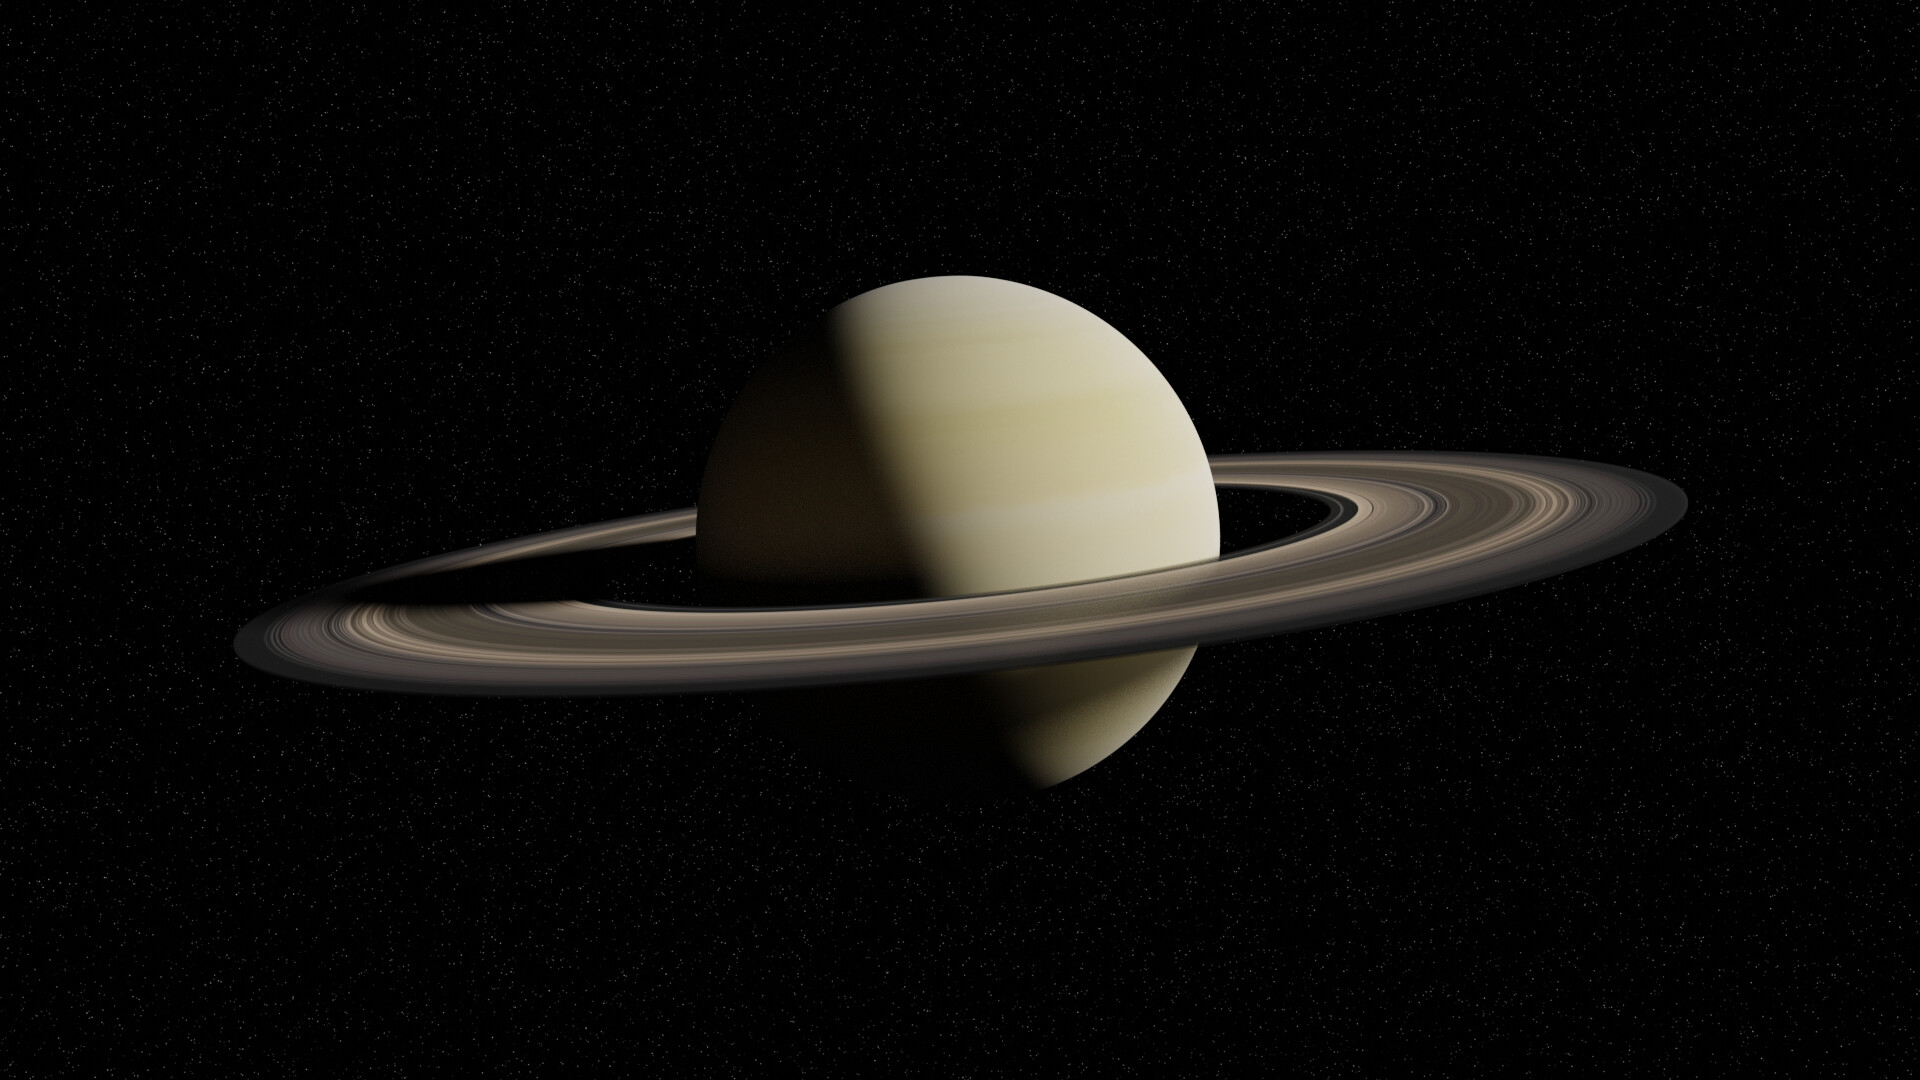 ArtStation - Saturn and Titan